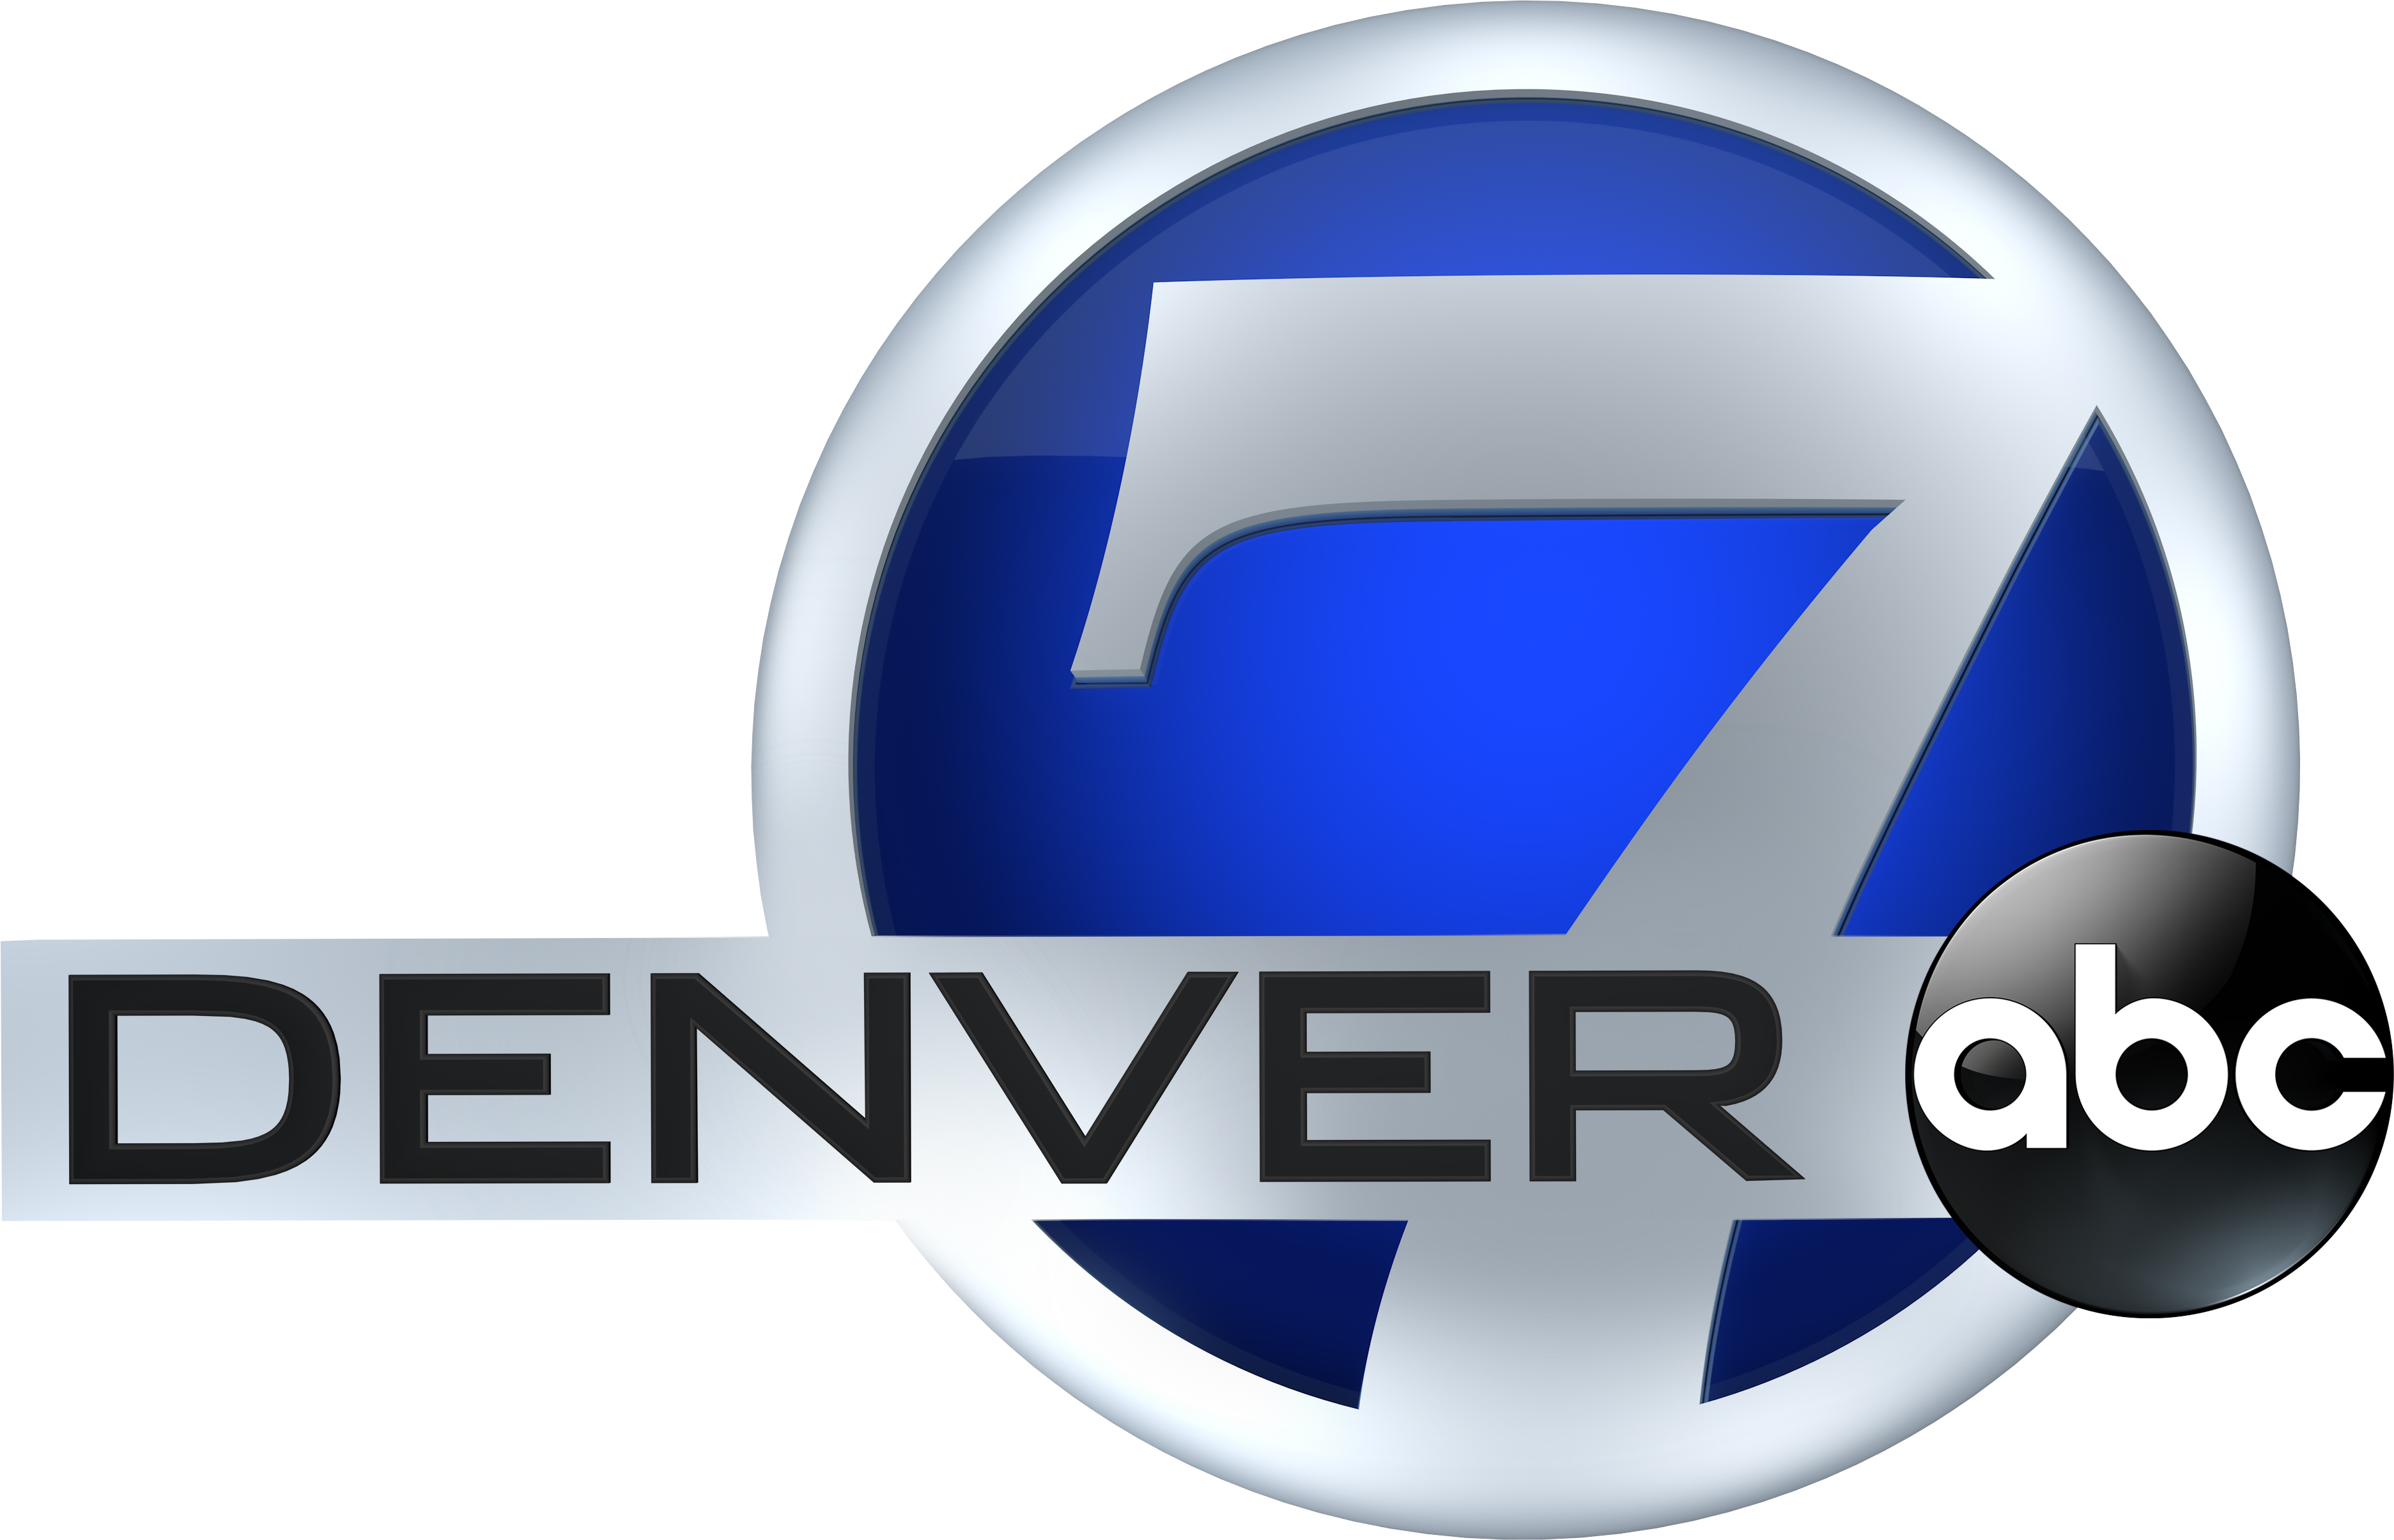 The Denver Channel 7 logo